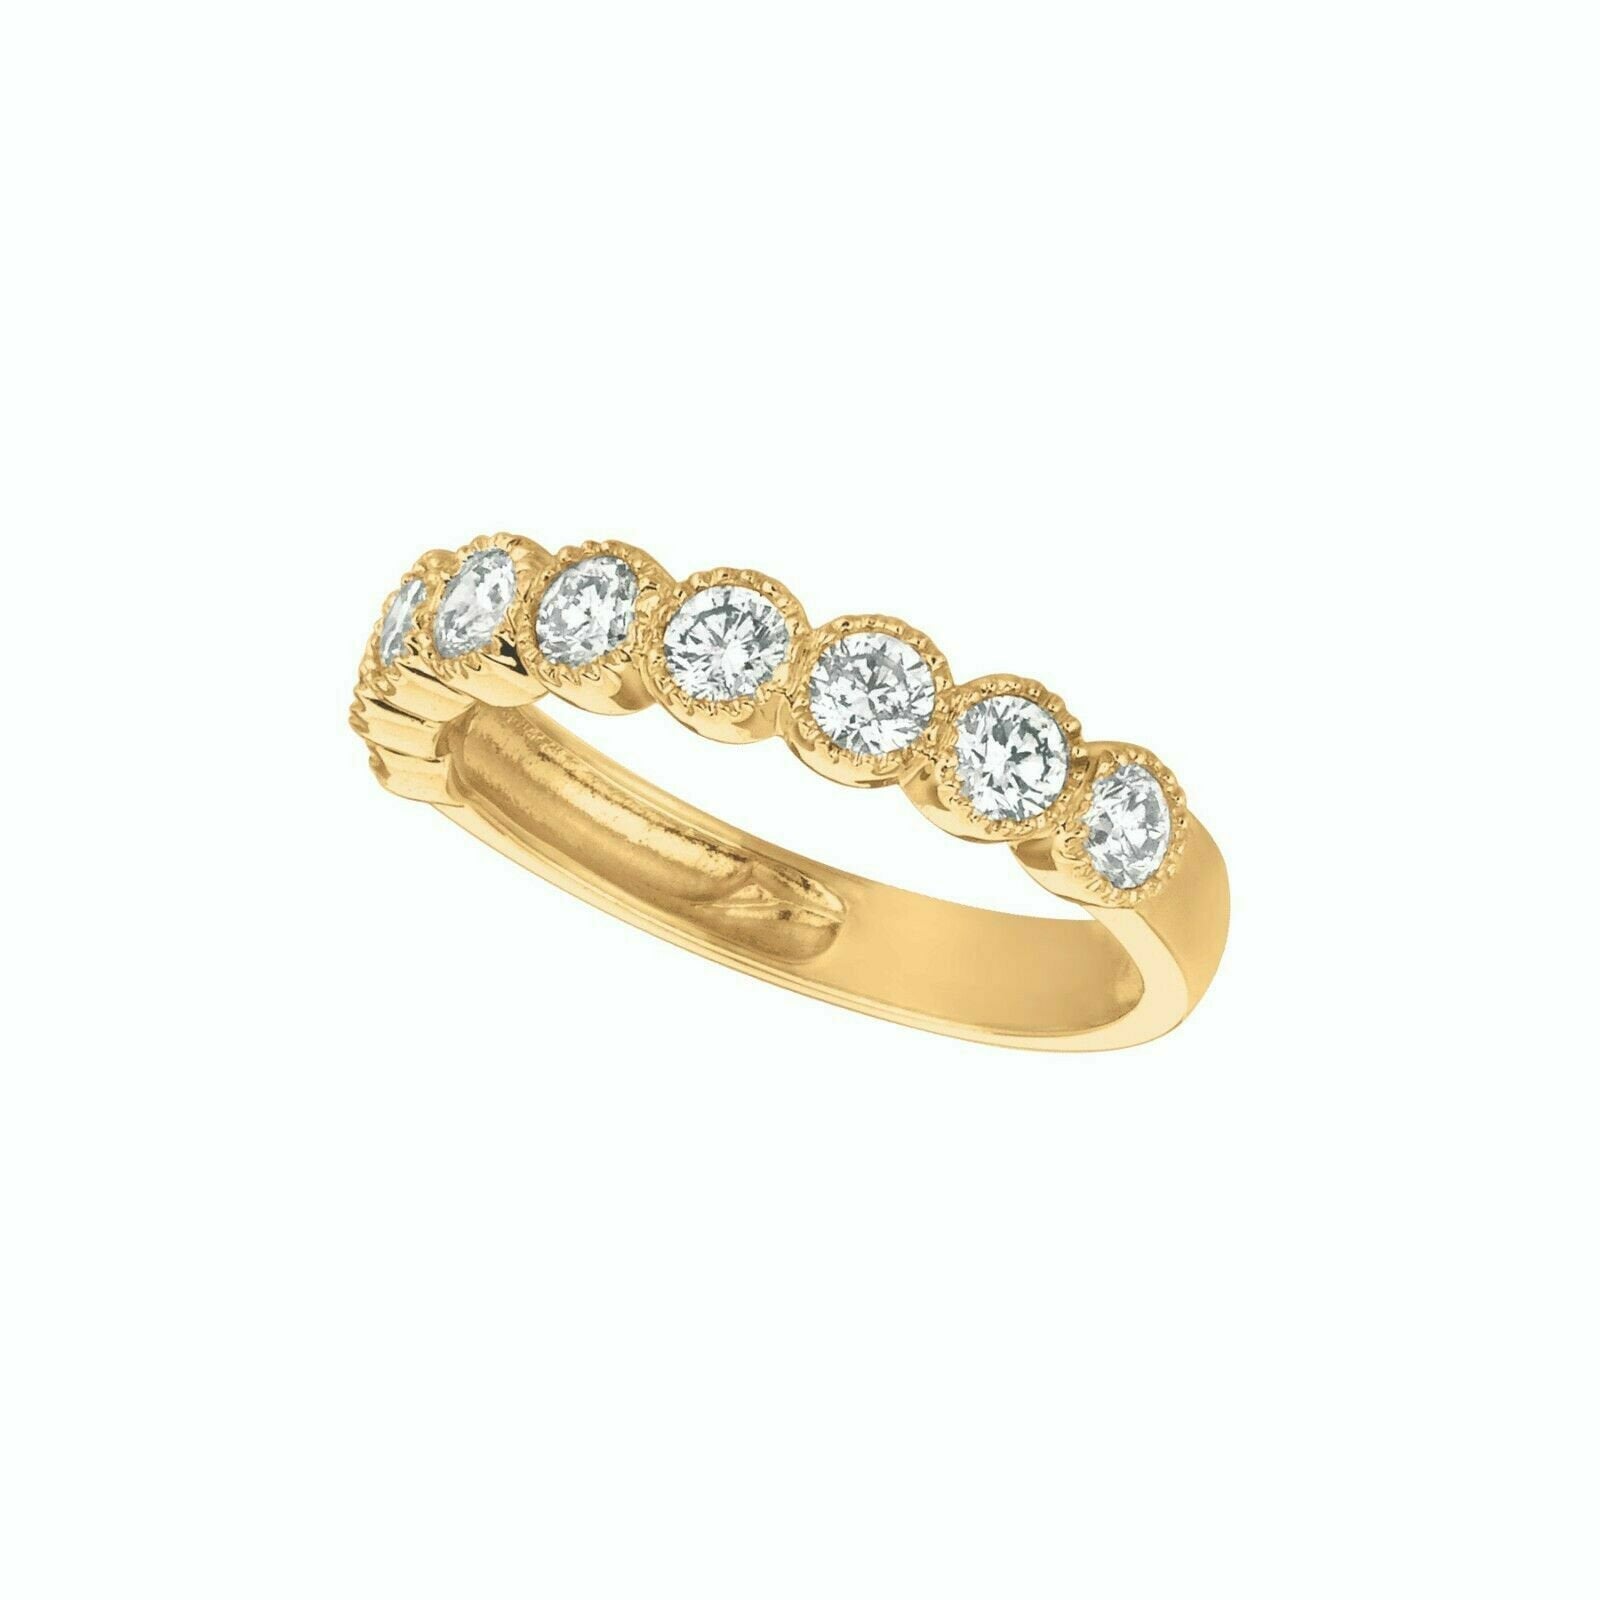 1.00 Carat Natural Diamond Ring G SI 14K Yellow Gold 9 stones 3mm width